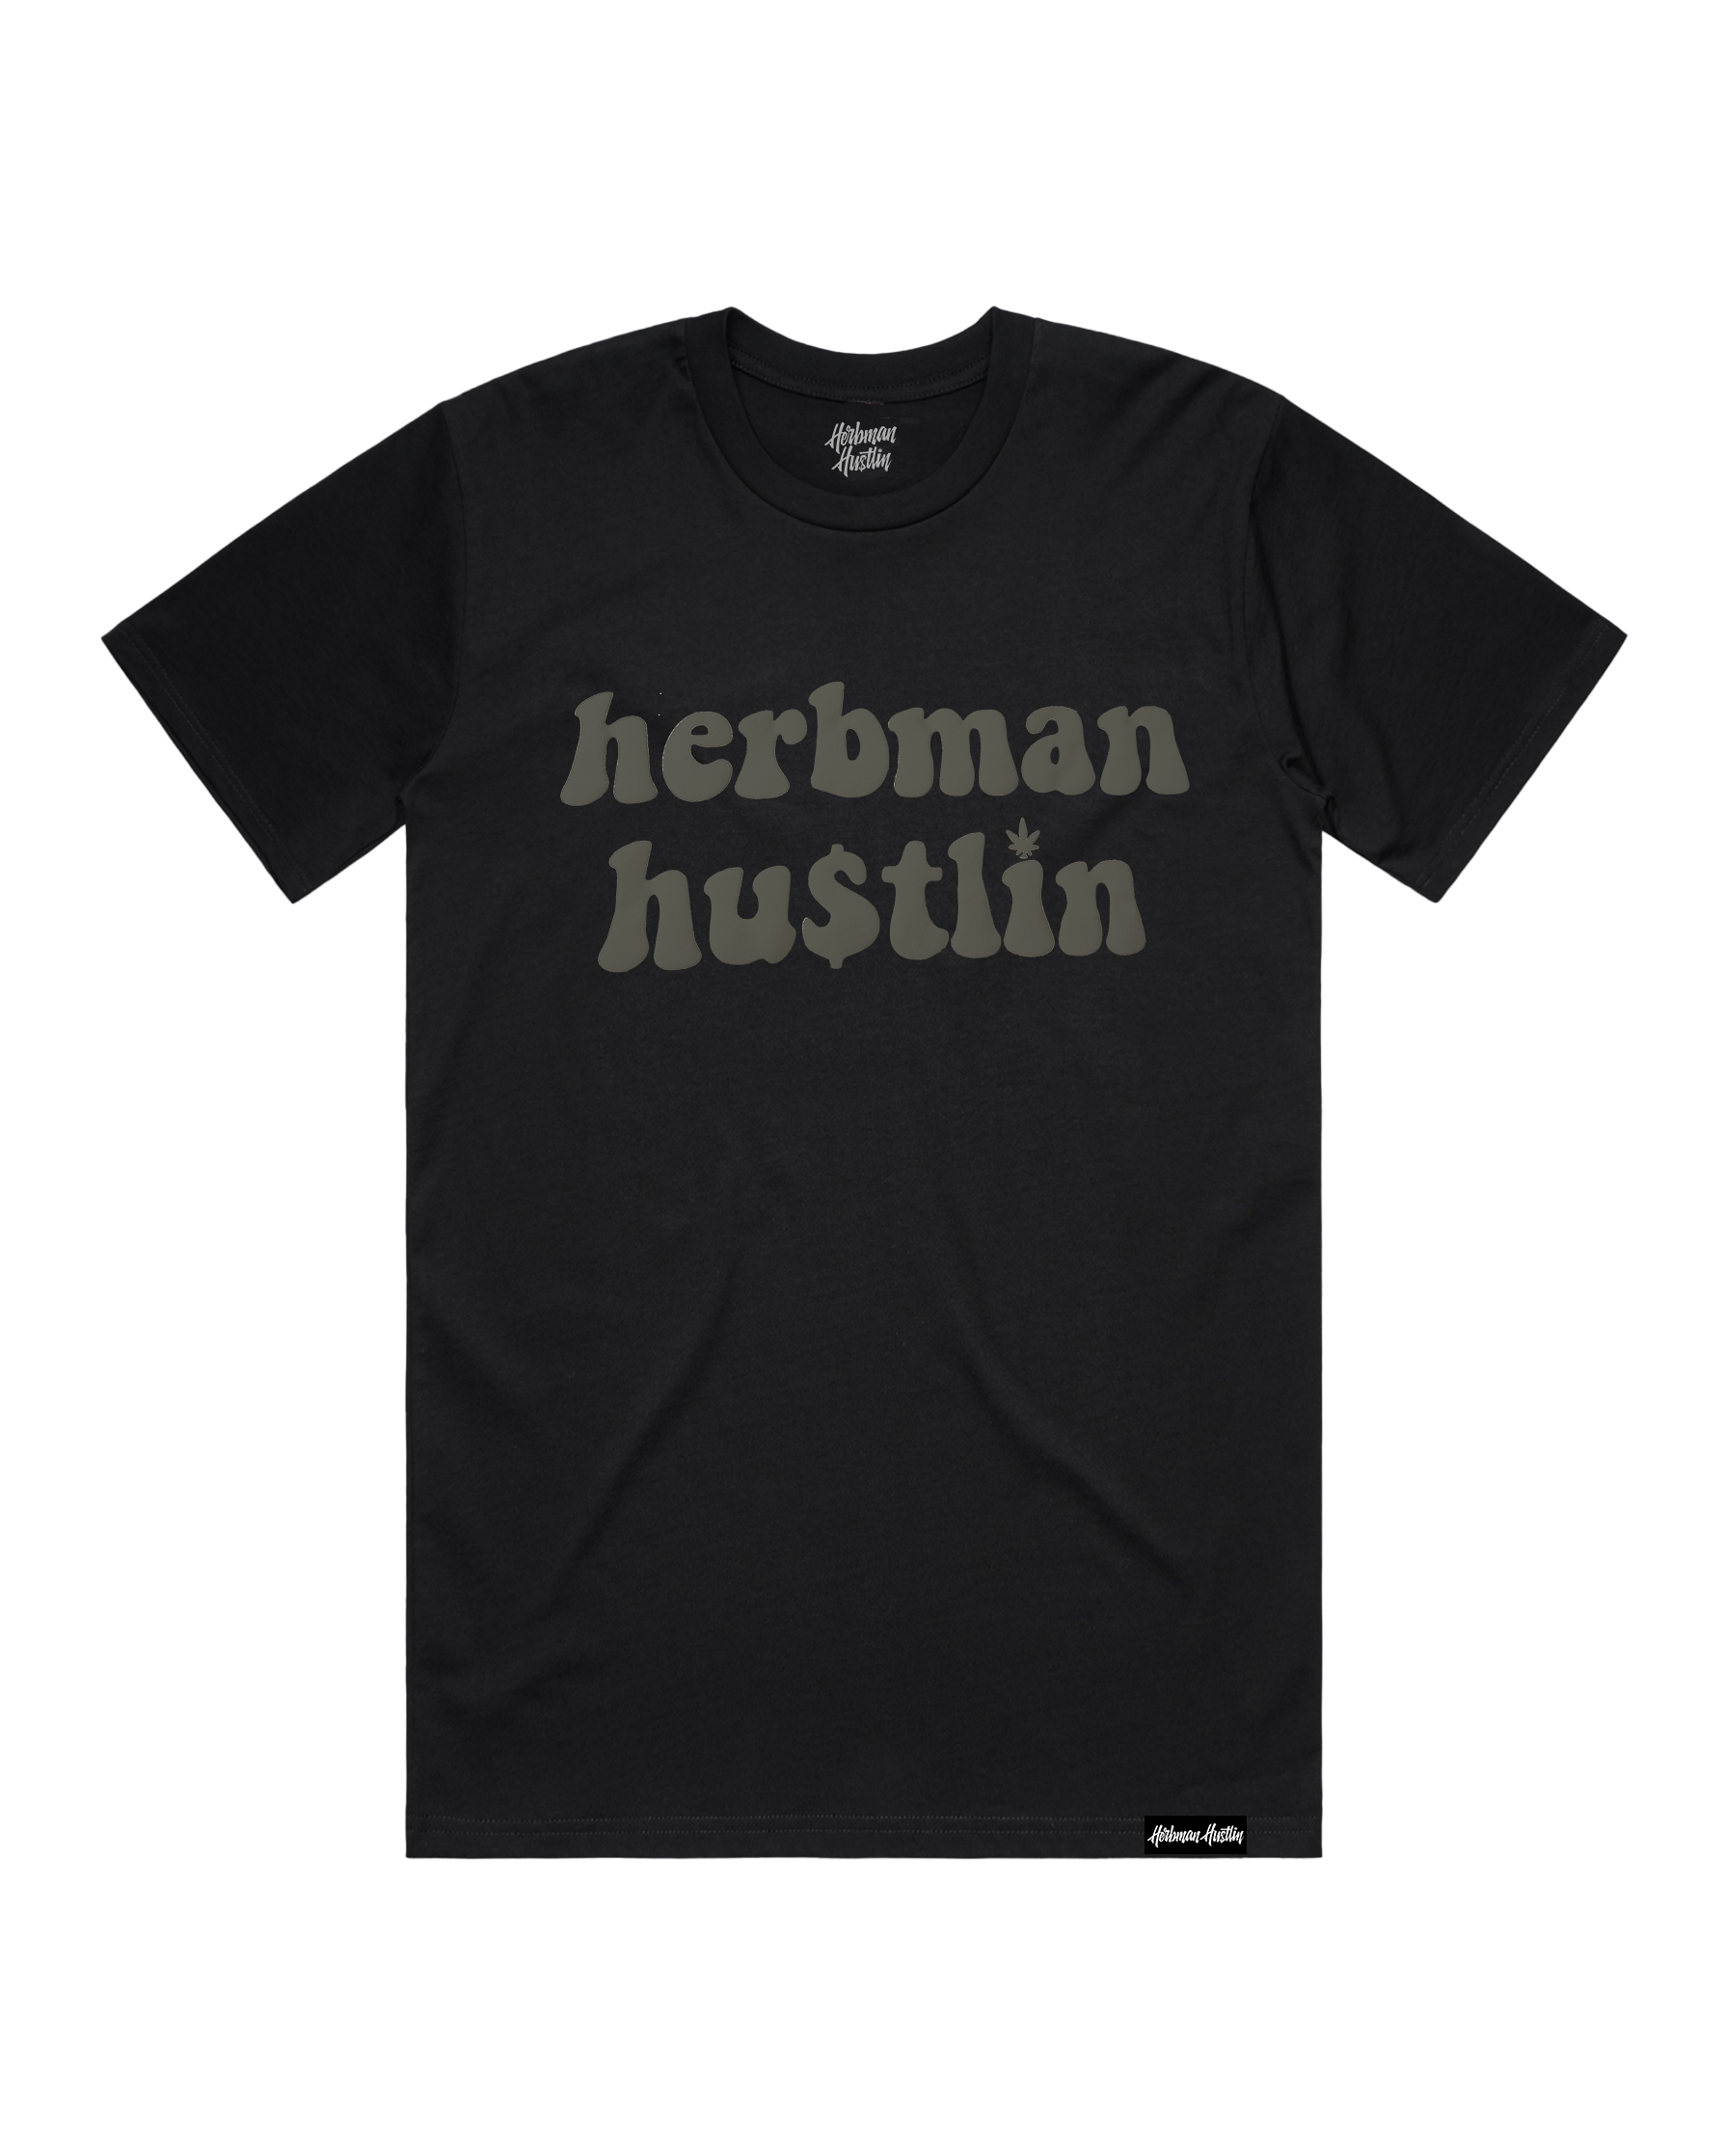 Herbman Hustlin Puff Puff Tee -  Black/Grey